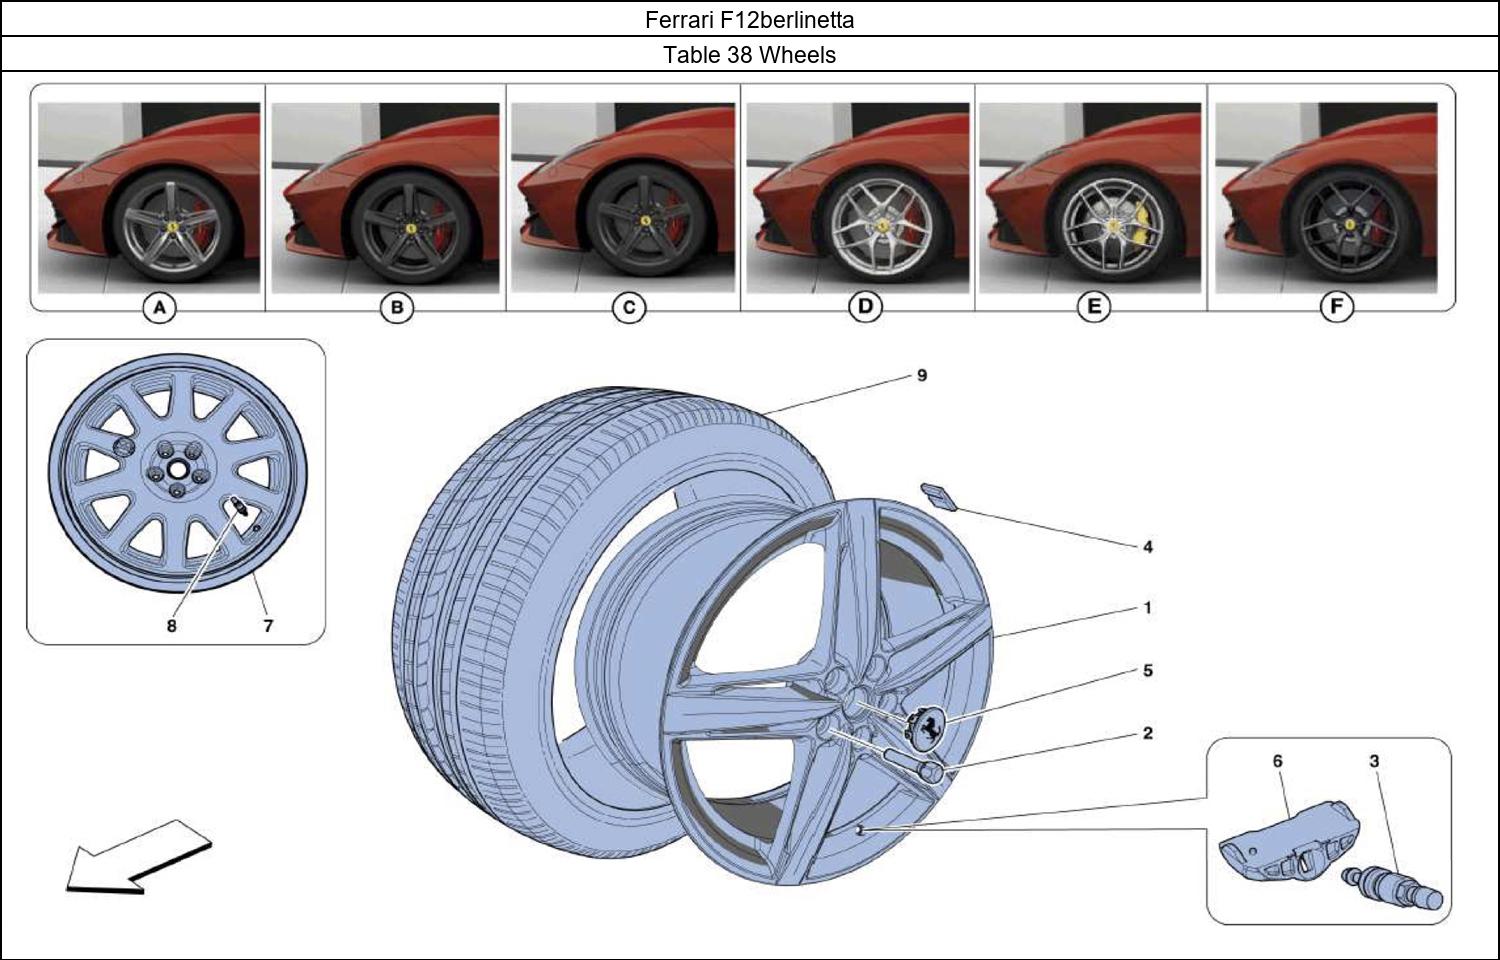 Ferrari Parts Ferrari F12berlinetta Table 38 Wheels